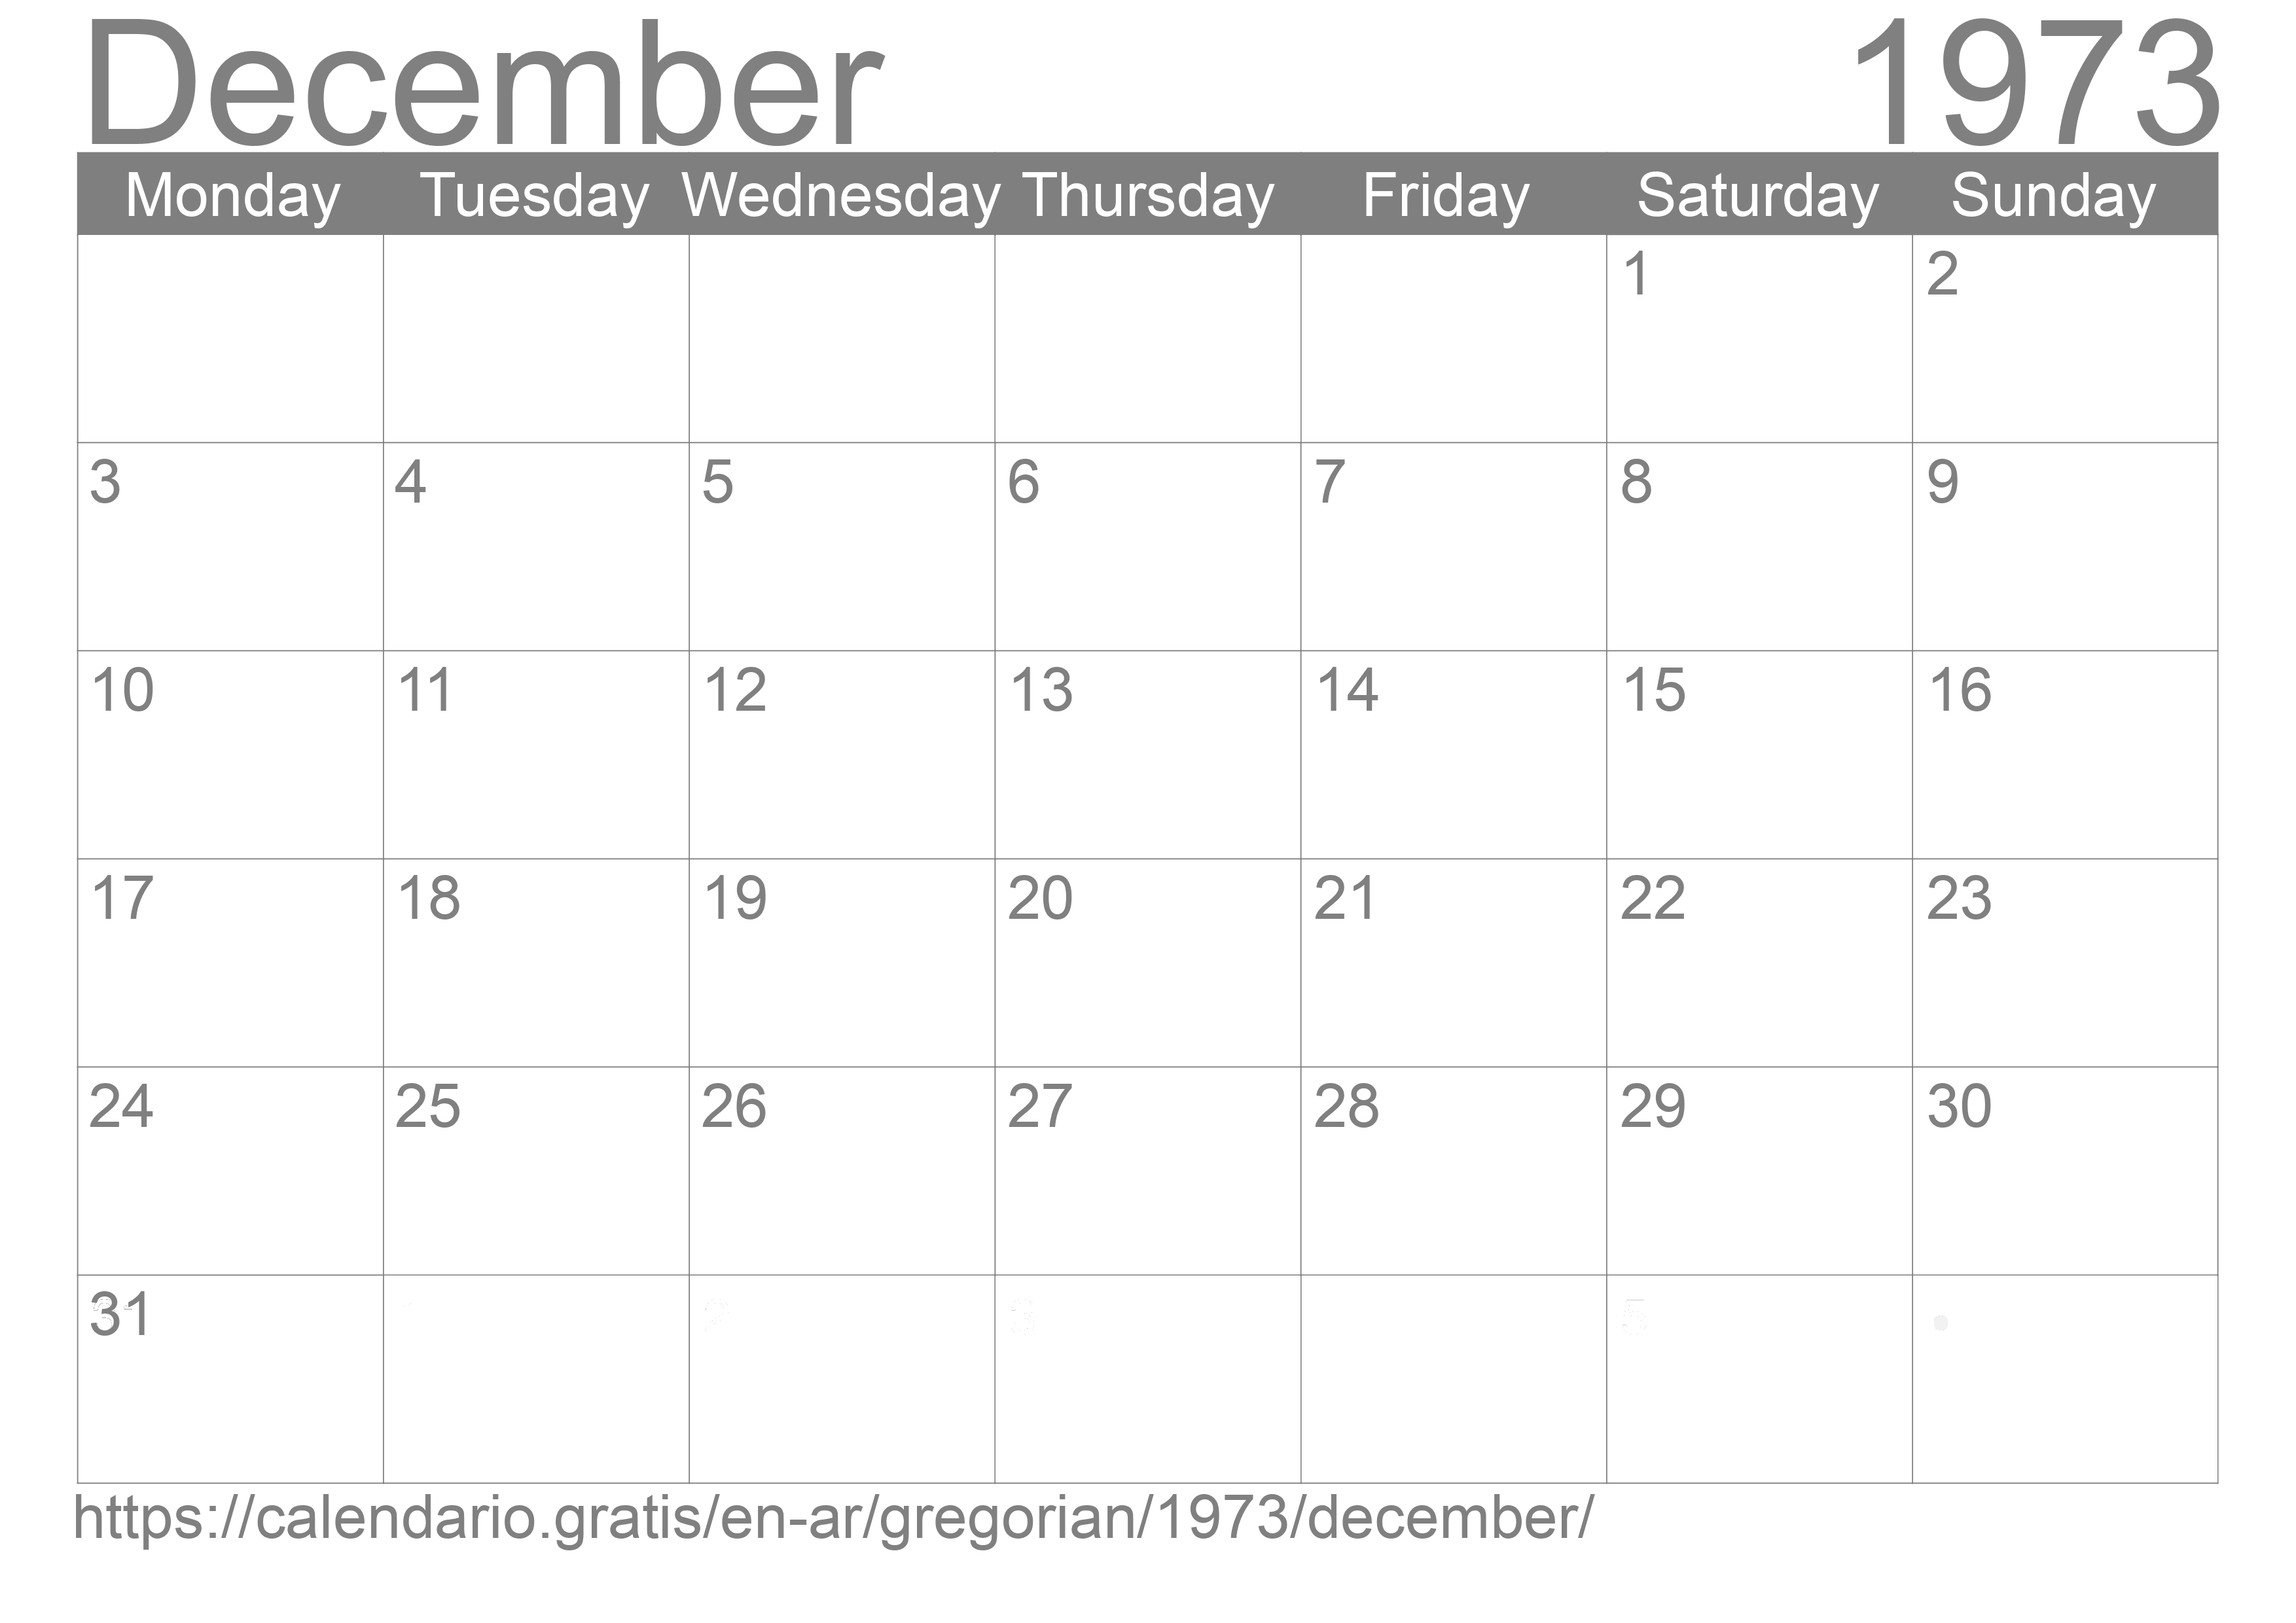 Calendar December 1973 to print